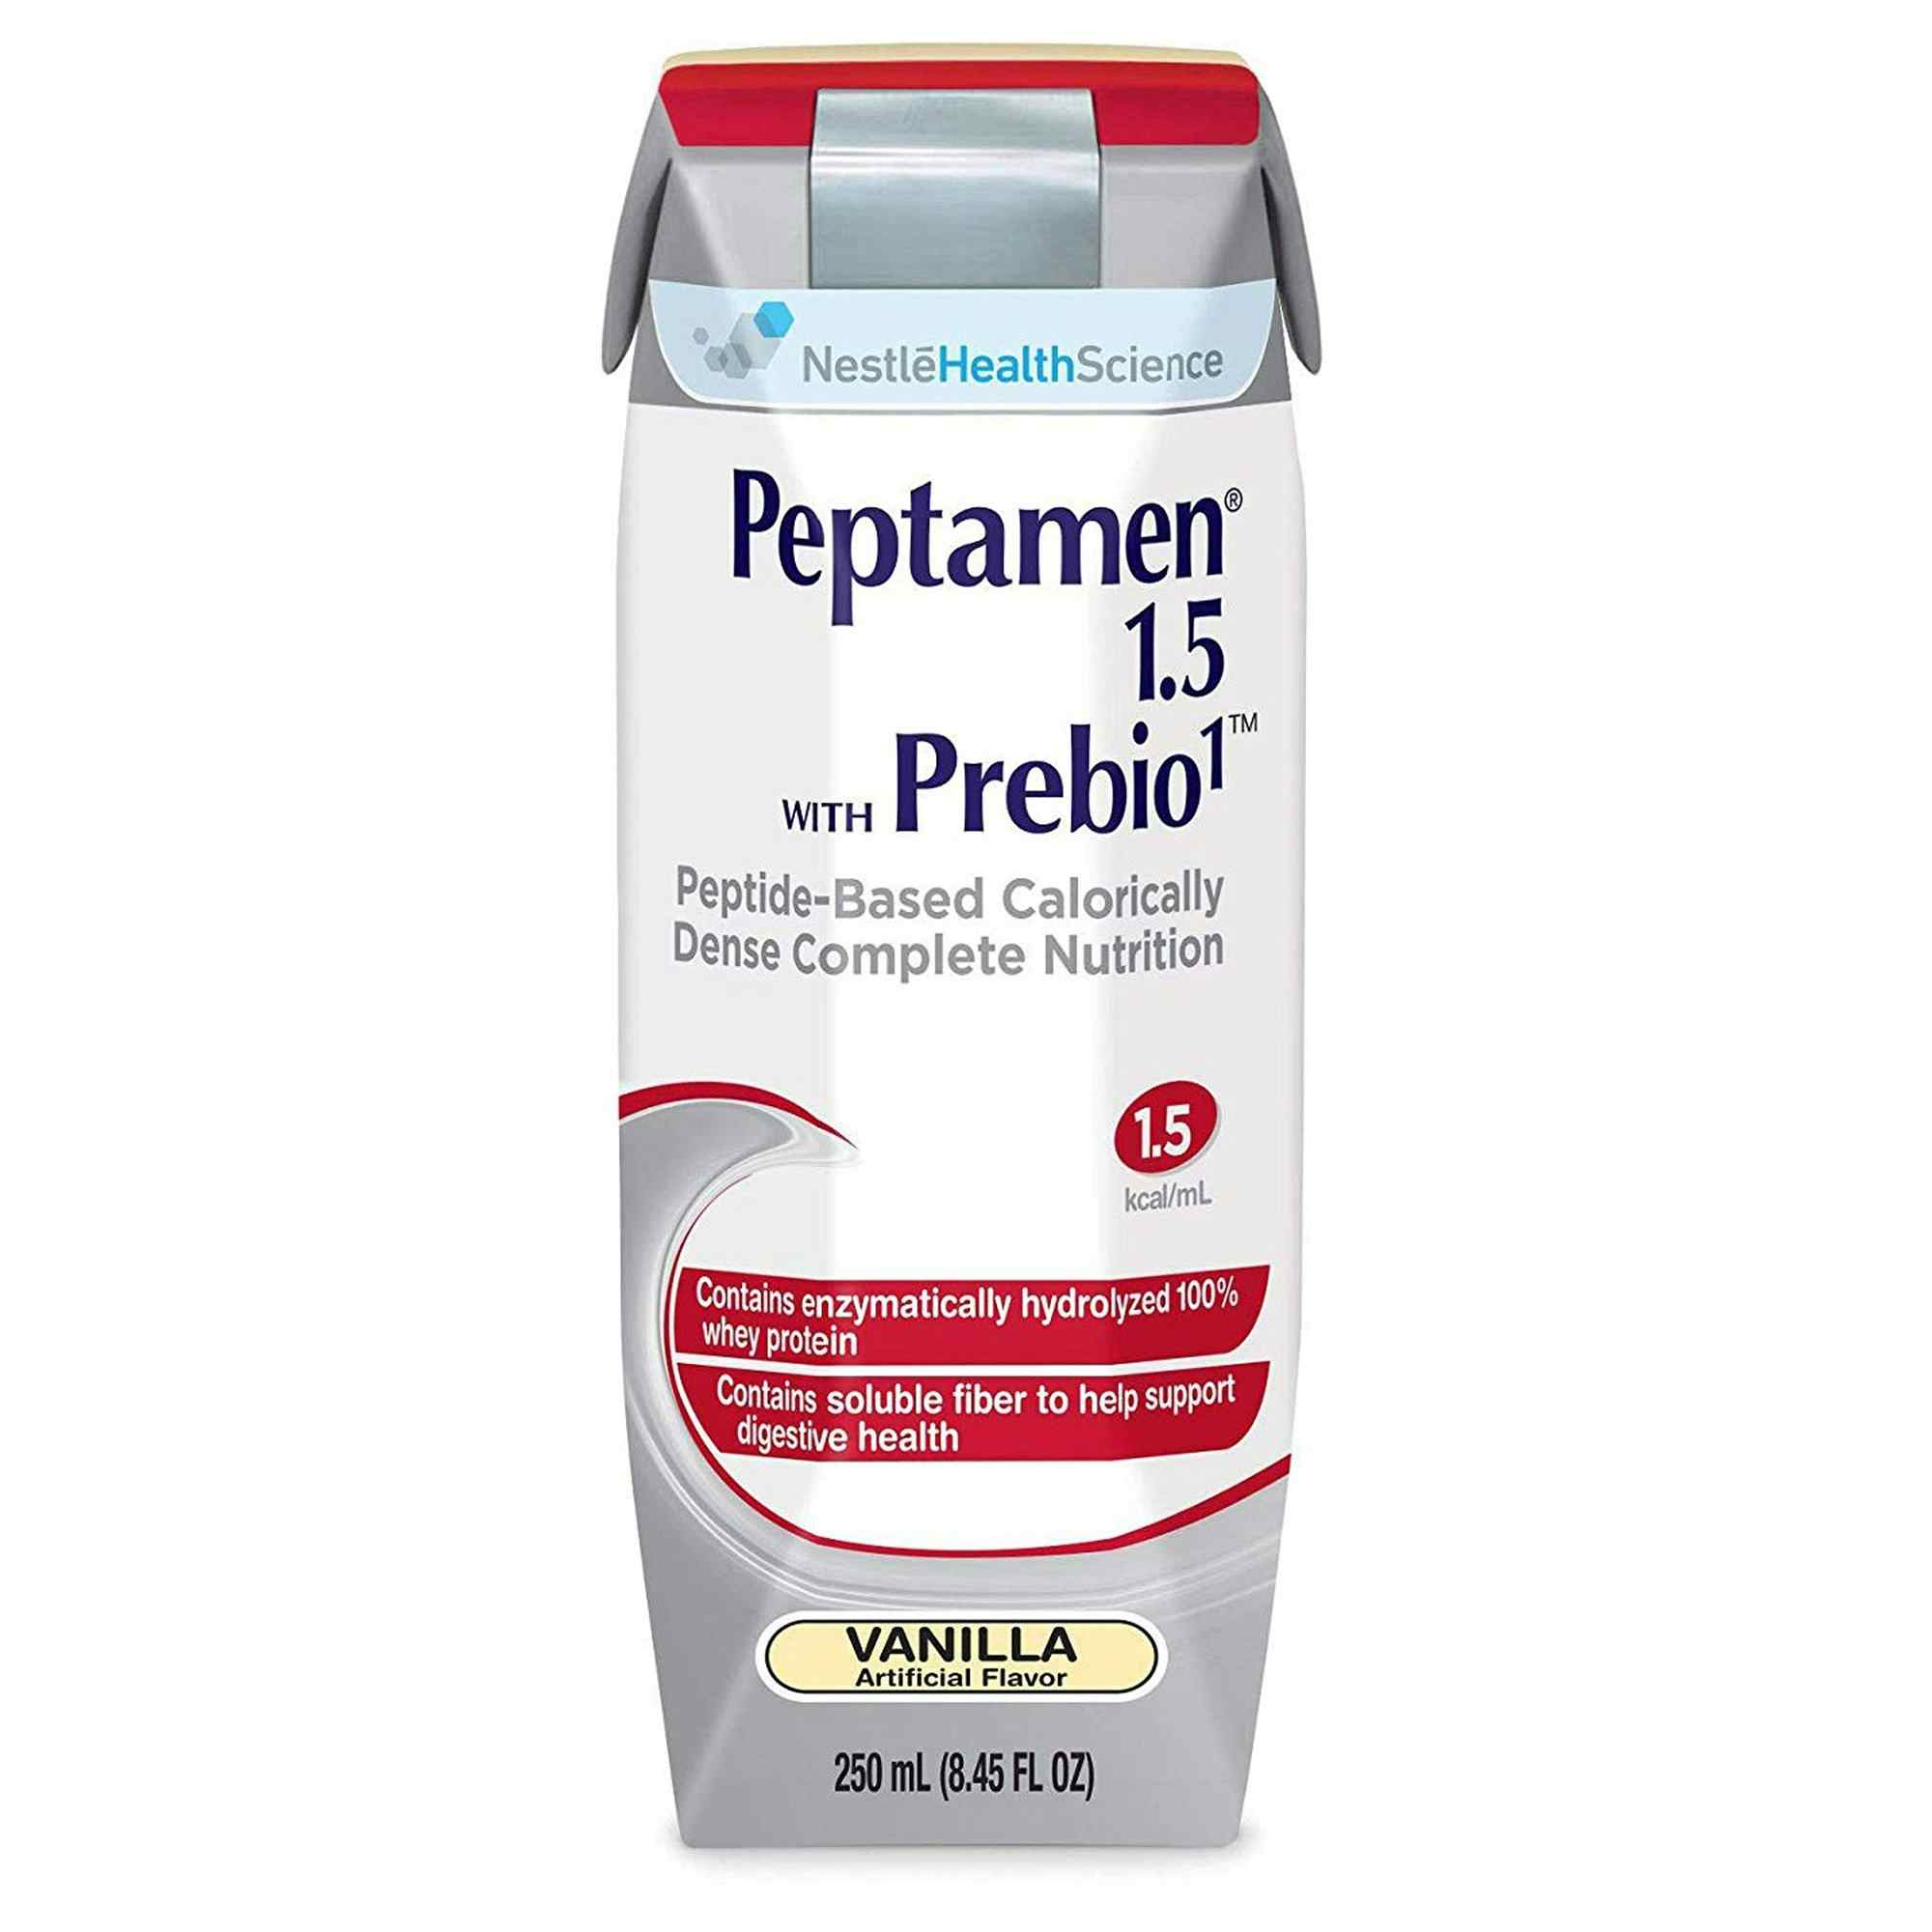 Nestle HealthScience Peptamen 1.5 with Prebio 1 Peptide-Based Calorically Dense Complete Nutrition Tube Feeding Formula, Vanilla, 250 mL, 10043900349586, Case of 24